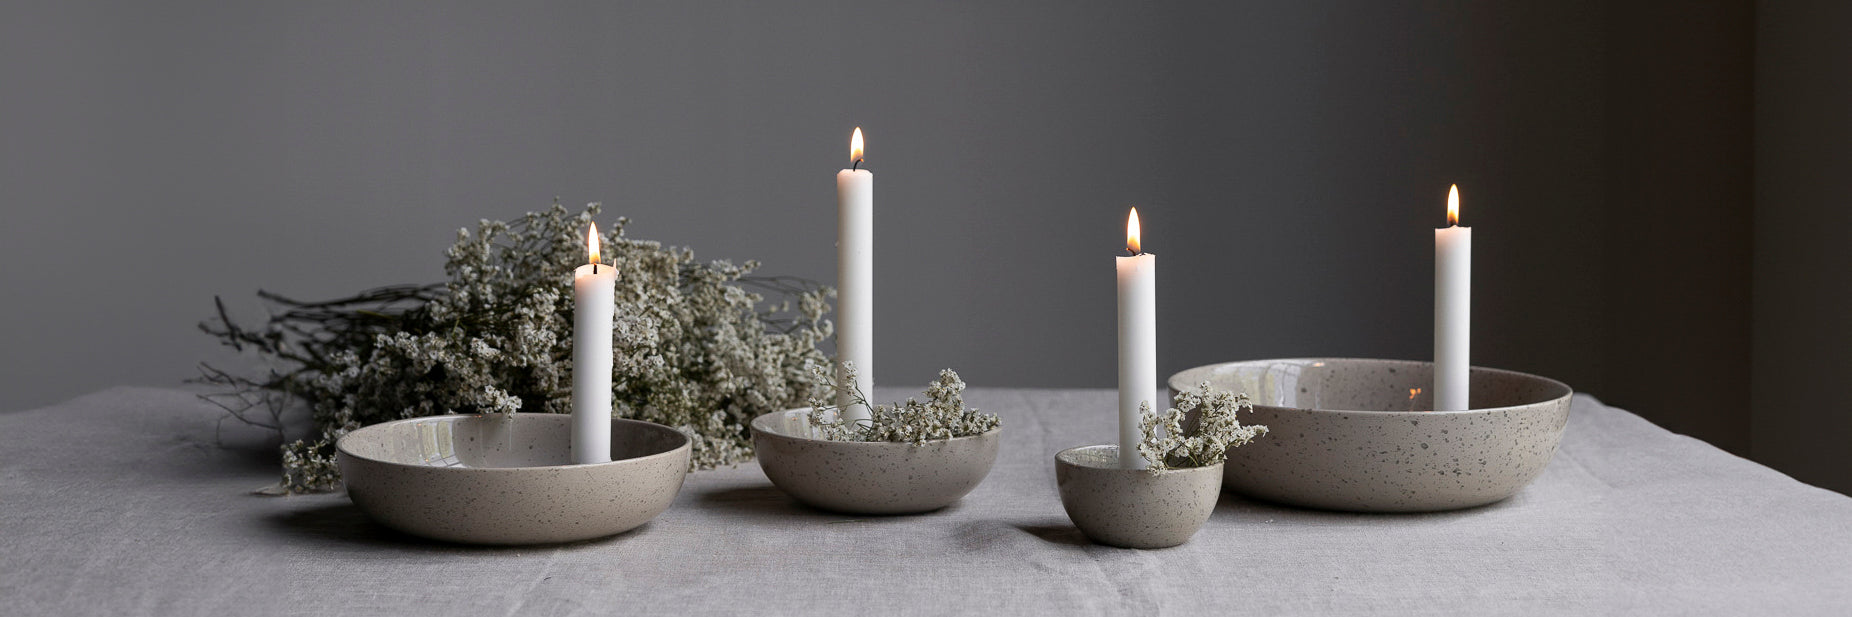 Kerzenhalter im skandinavischen Stil gefertigt Keramik / Holz aus